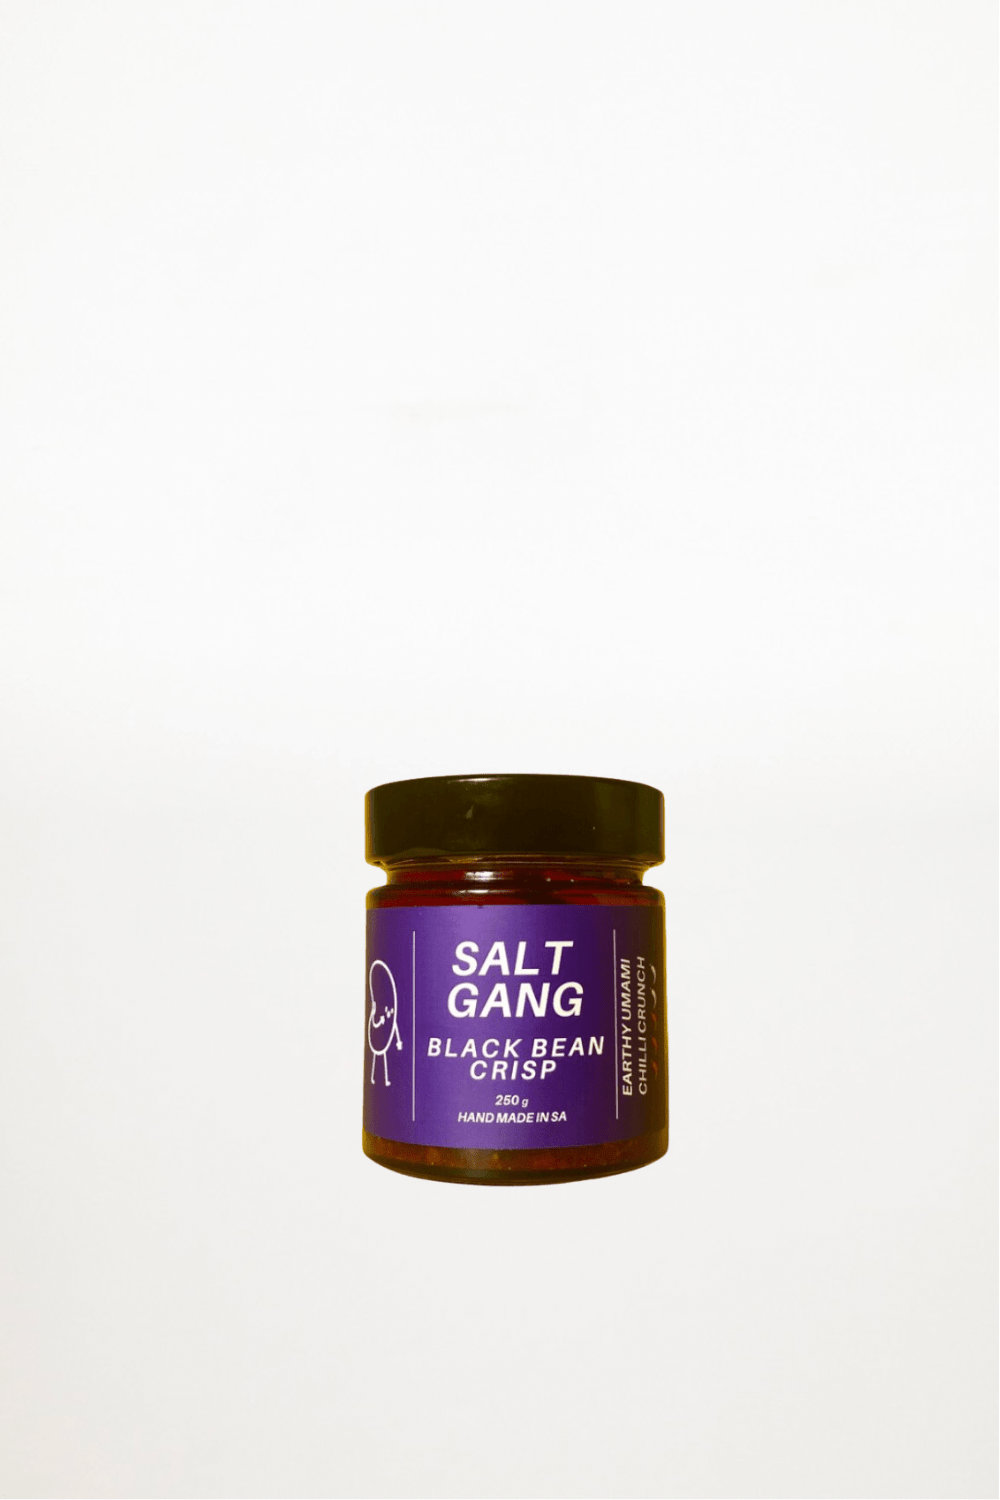 Salt Gang - Black Bean Chilli Crisp - Ensemble Studios